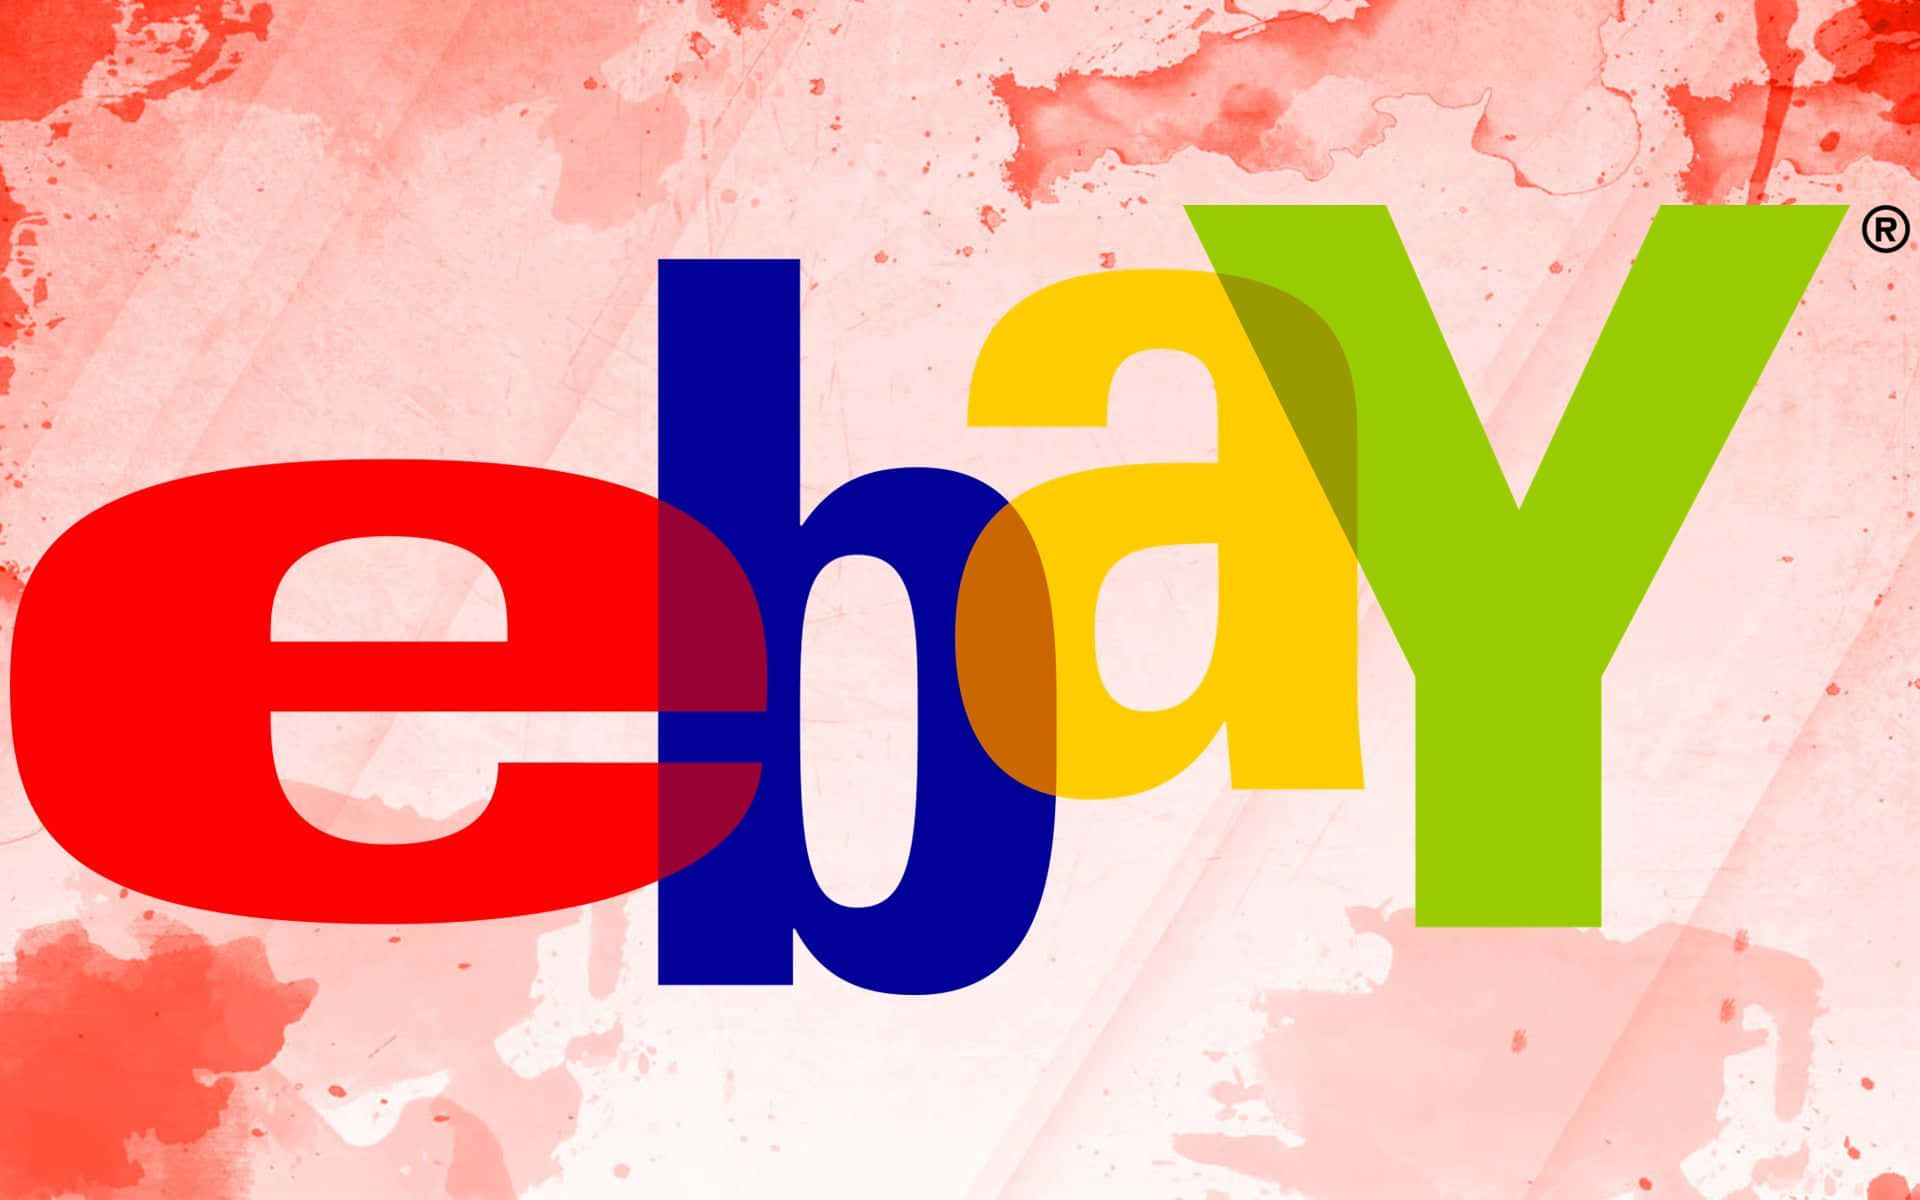 Ebay Logo With Blood On It